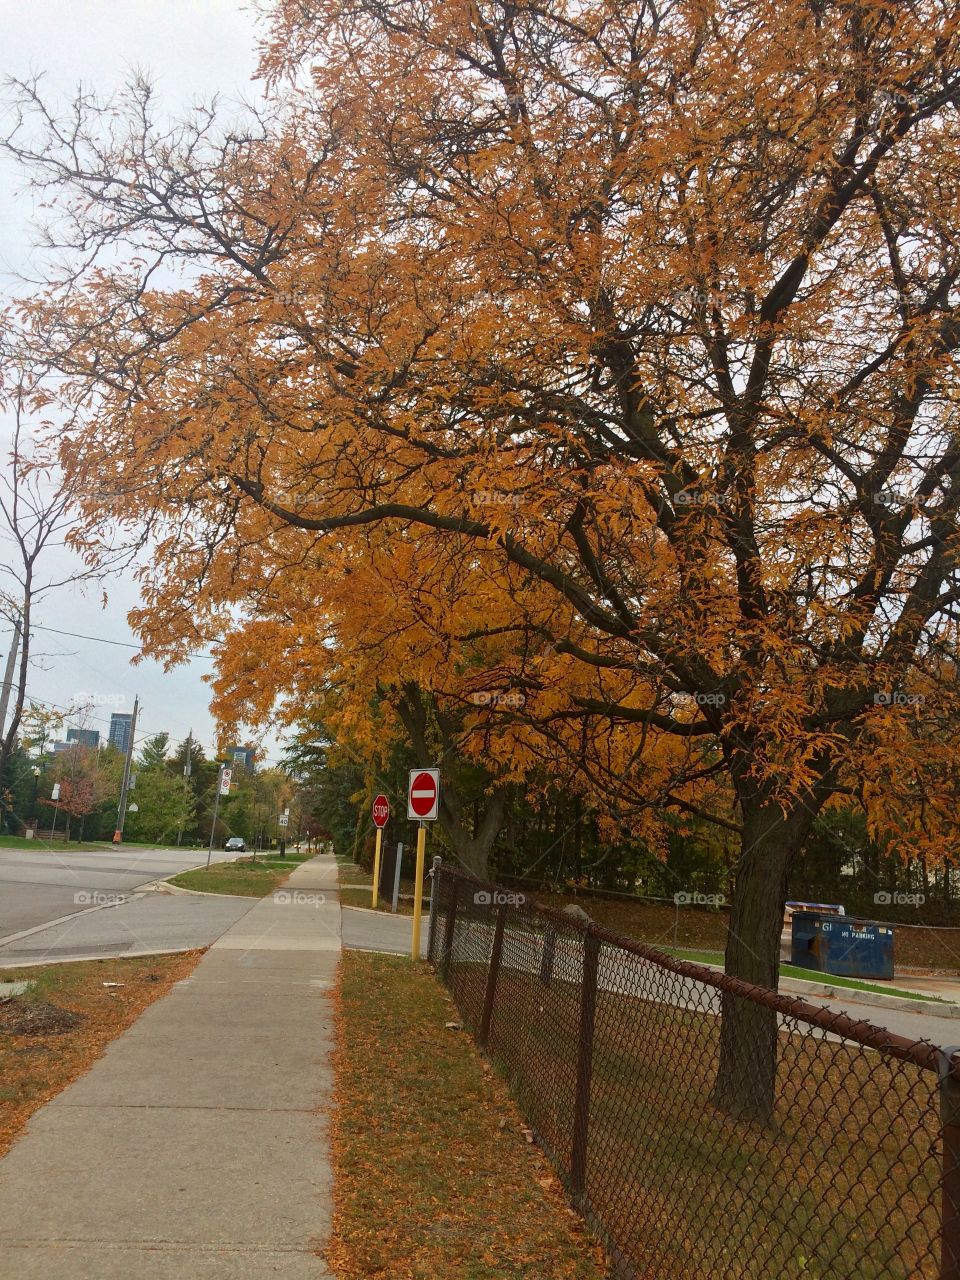 Trees in fall